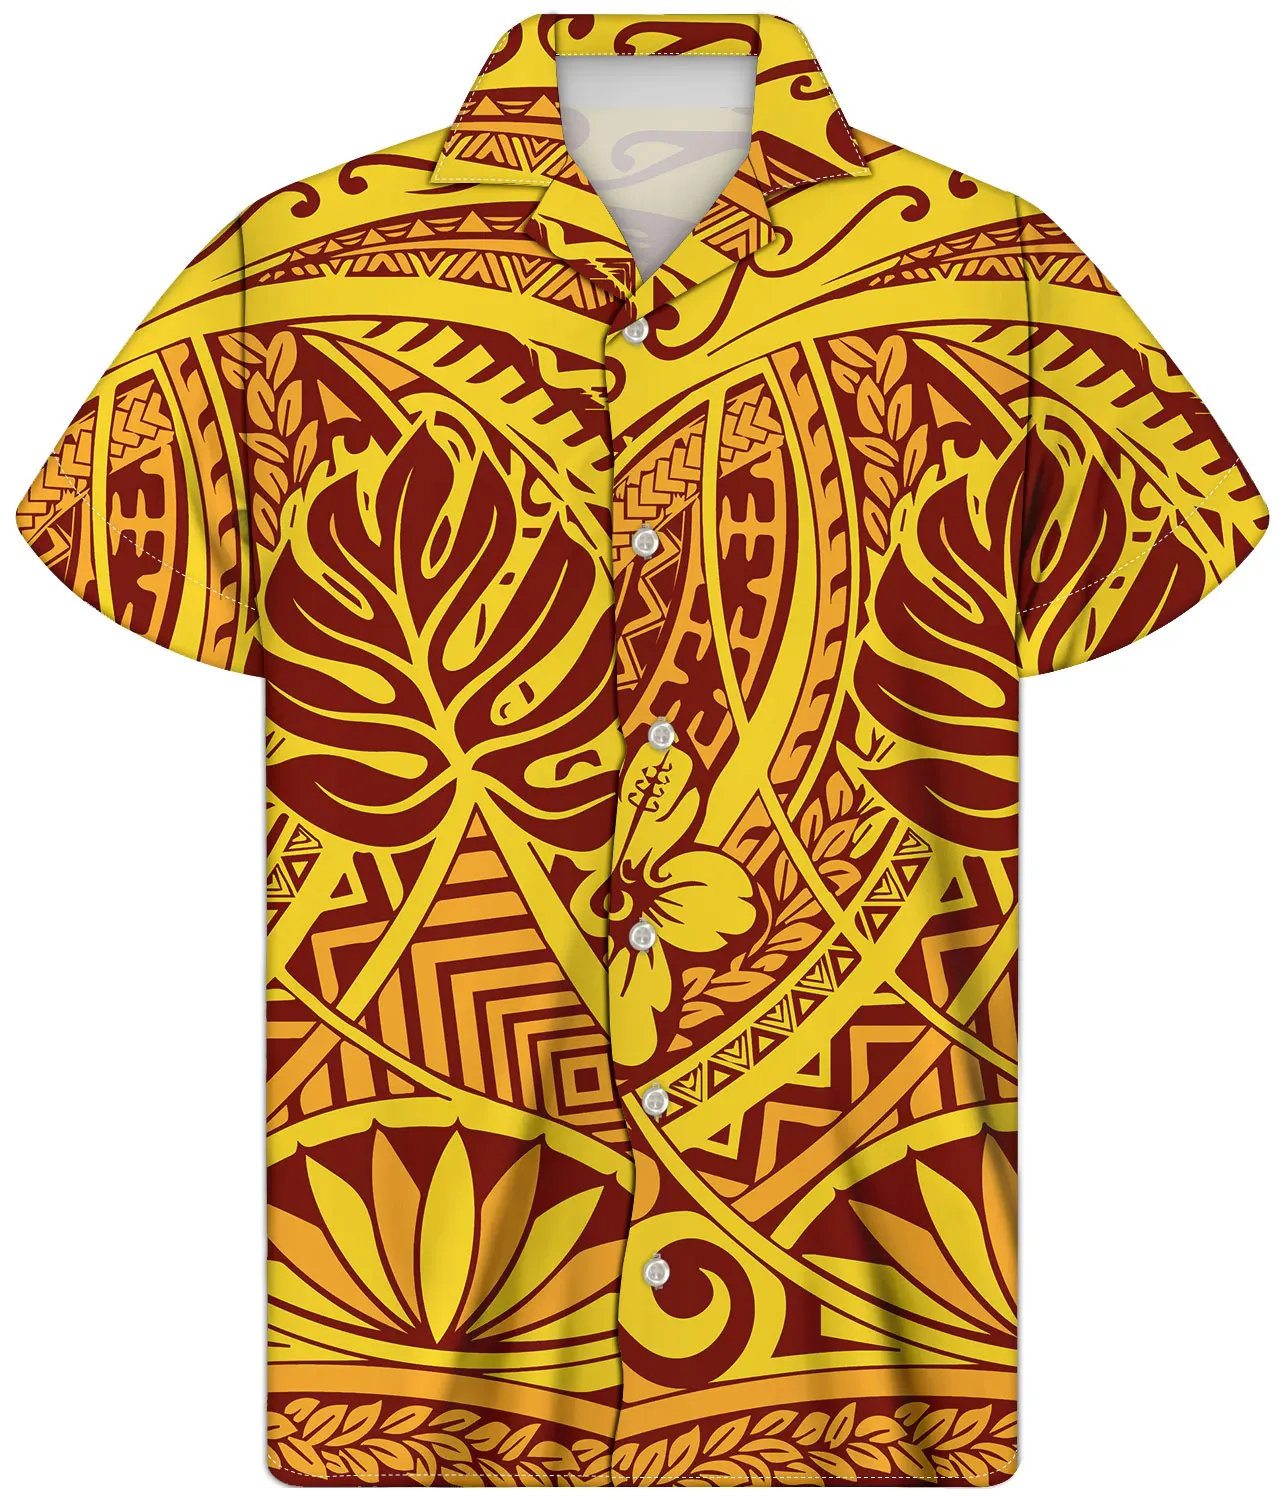 Fancy Gold Shirts For Men Polynesian Tribal Fabric Hawaiian Short Sleeve Shirt Men Summer Clothing for Men's Tropical Tops Shirt